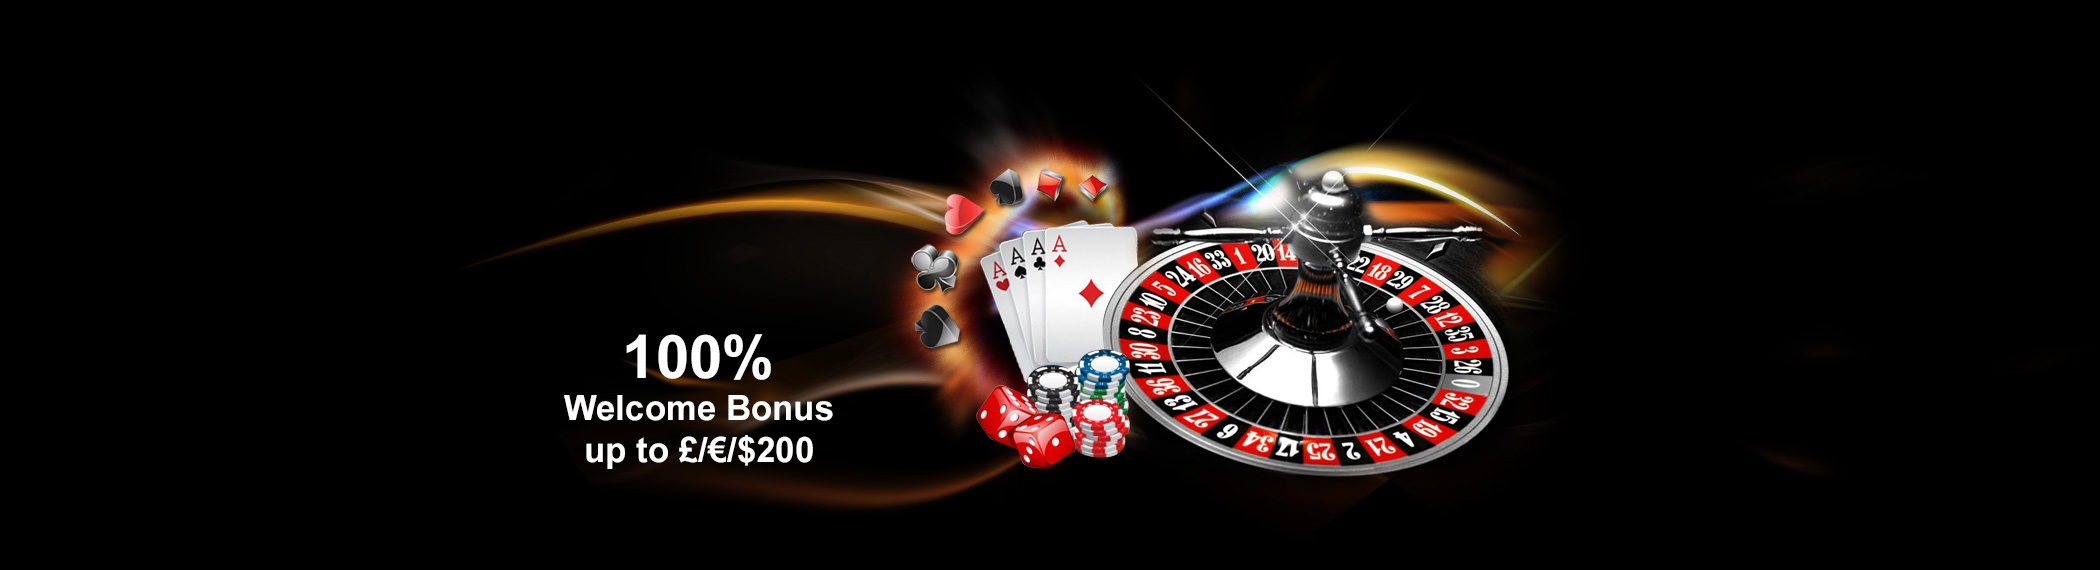 UK Casino Bonus Codes | up to £100  in Deposit Matches Online